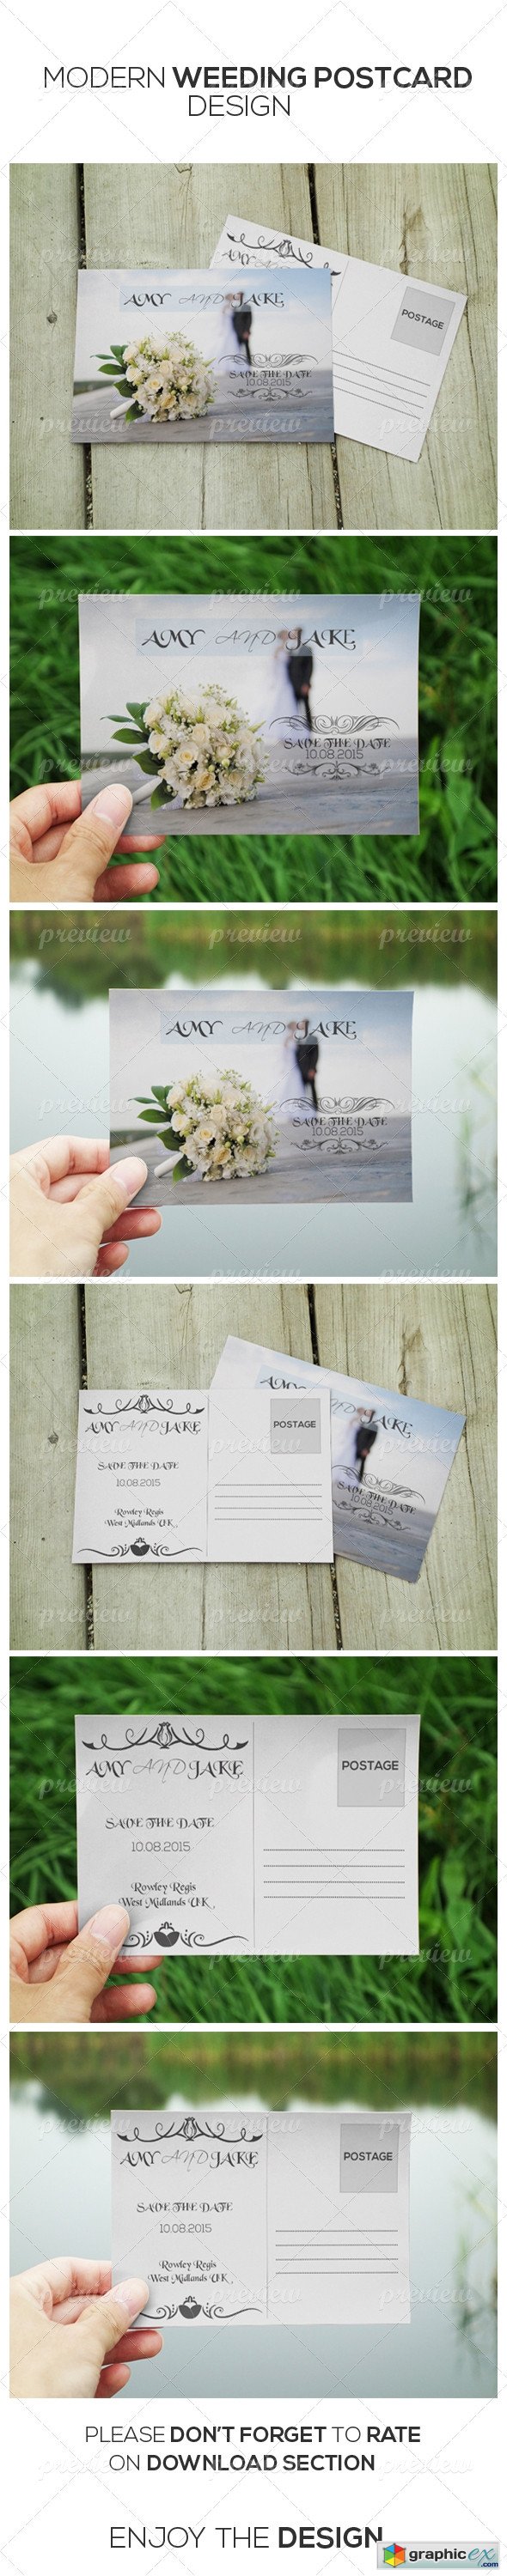 Modern Style Wedding invitation Post Card